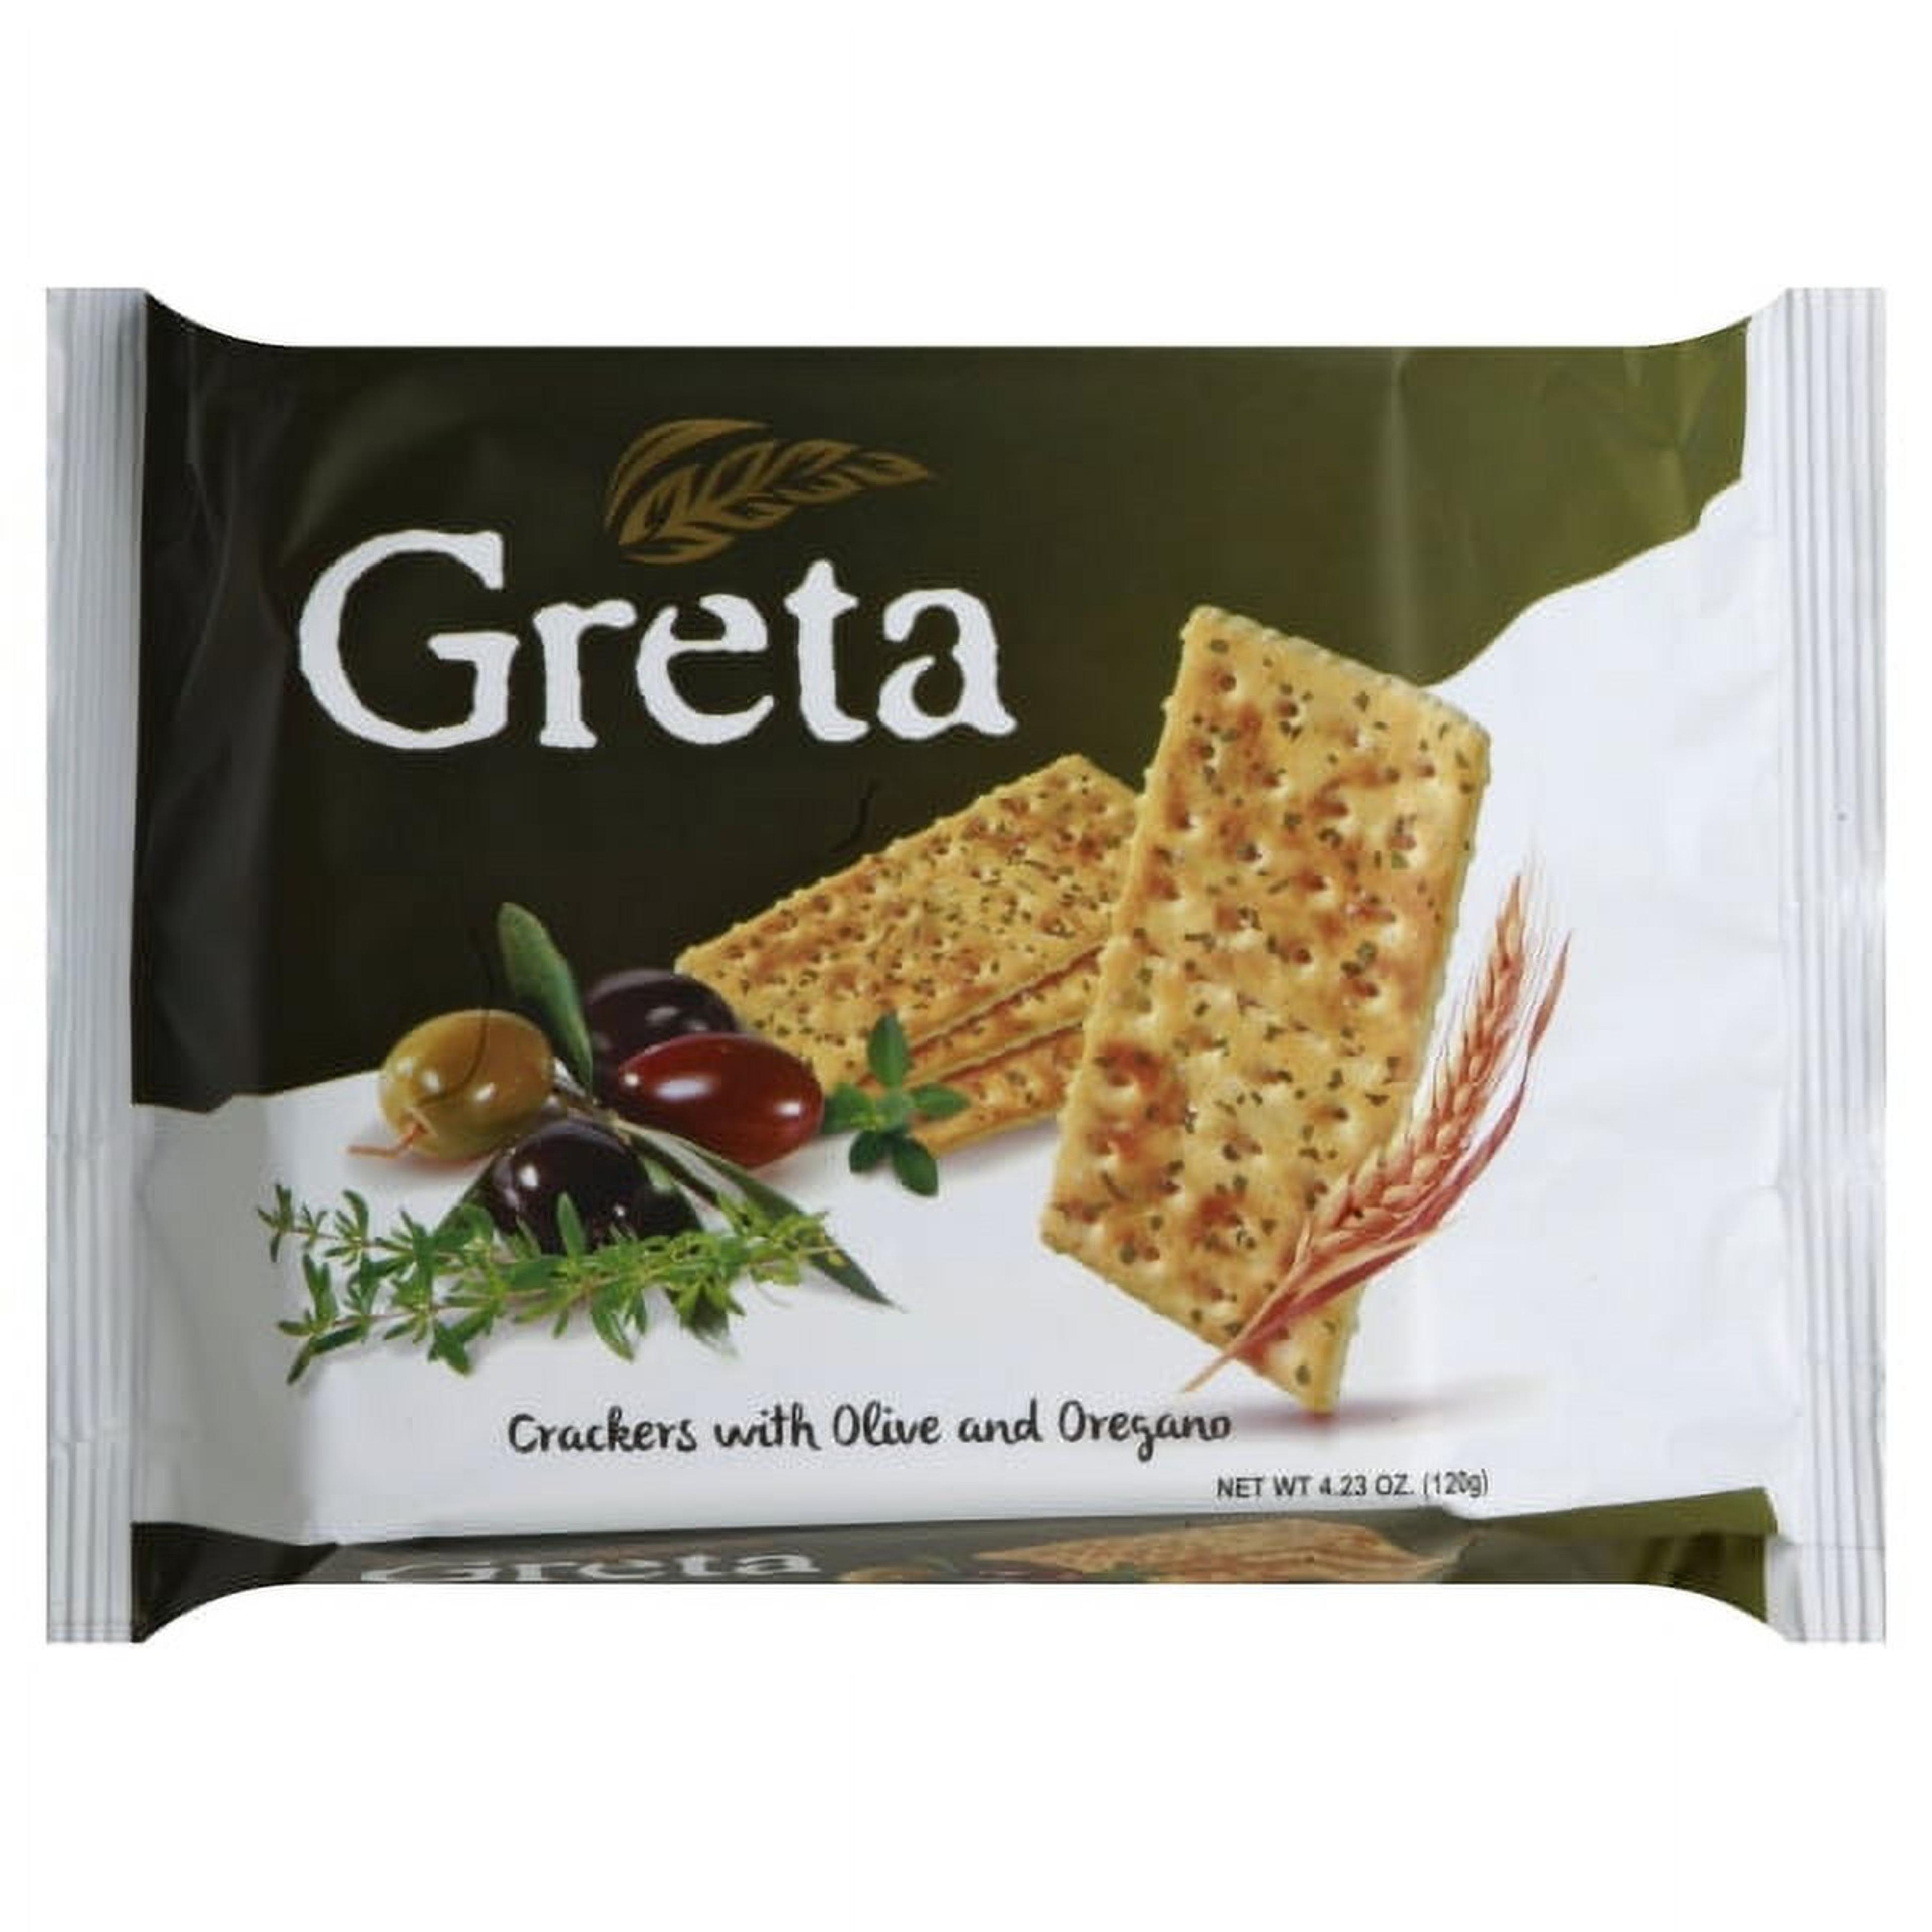 Greta Crackers with Olive and Oregano, 2 Pack, 4.23 oz each - Walmart.com